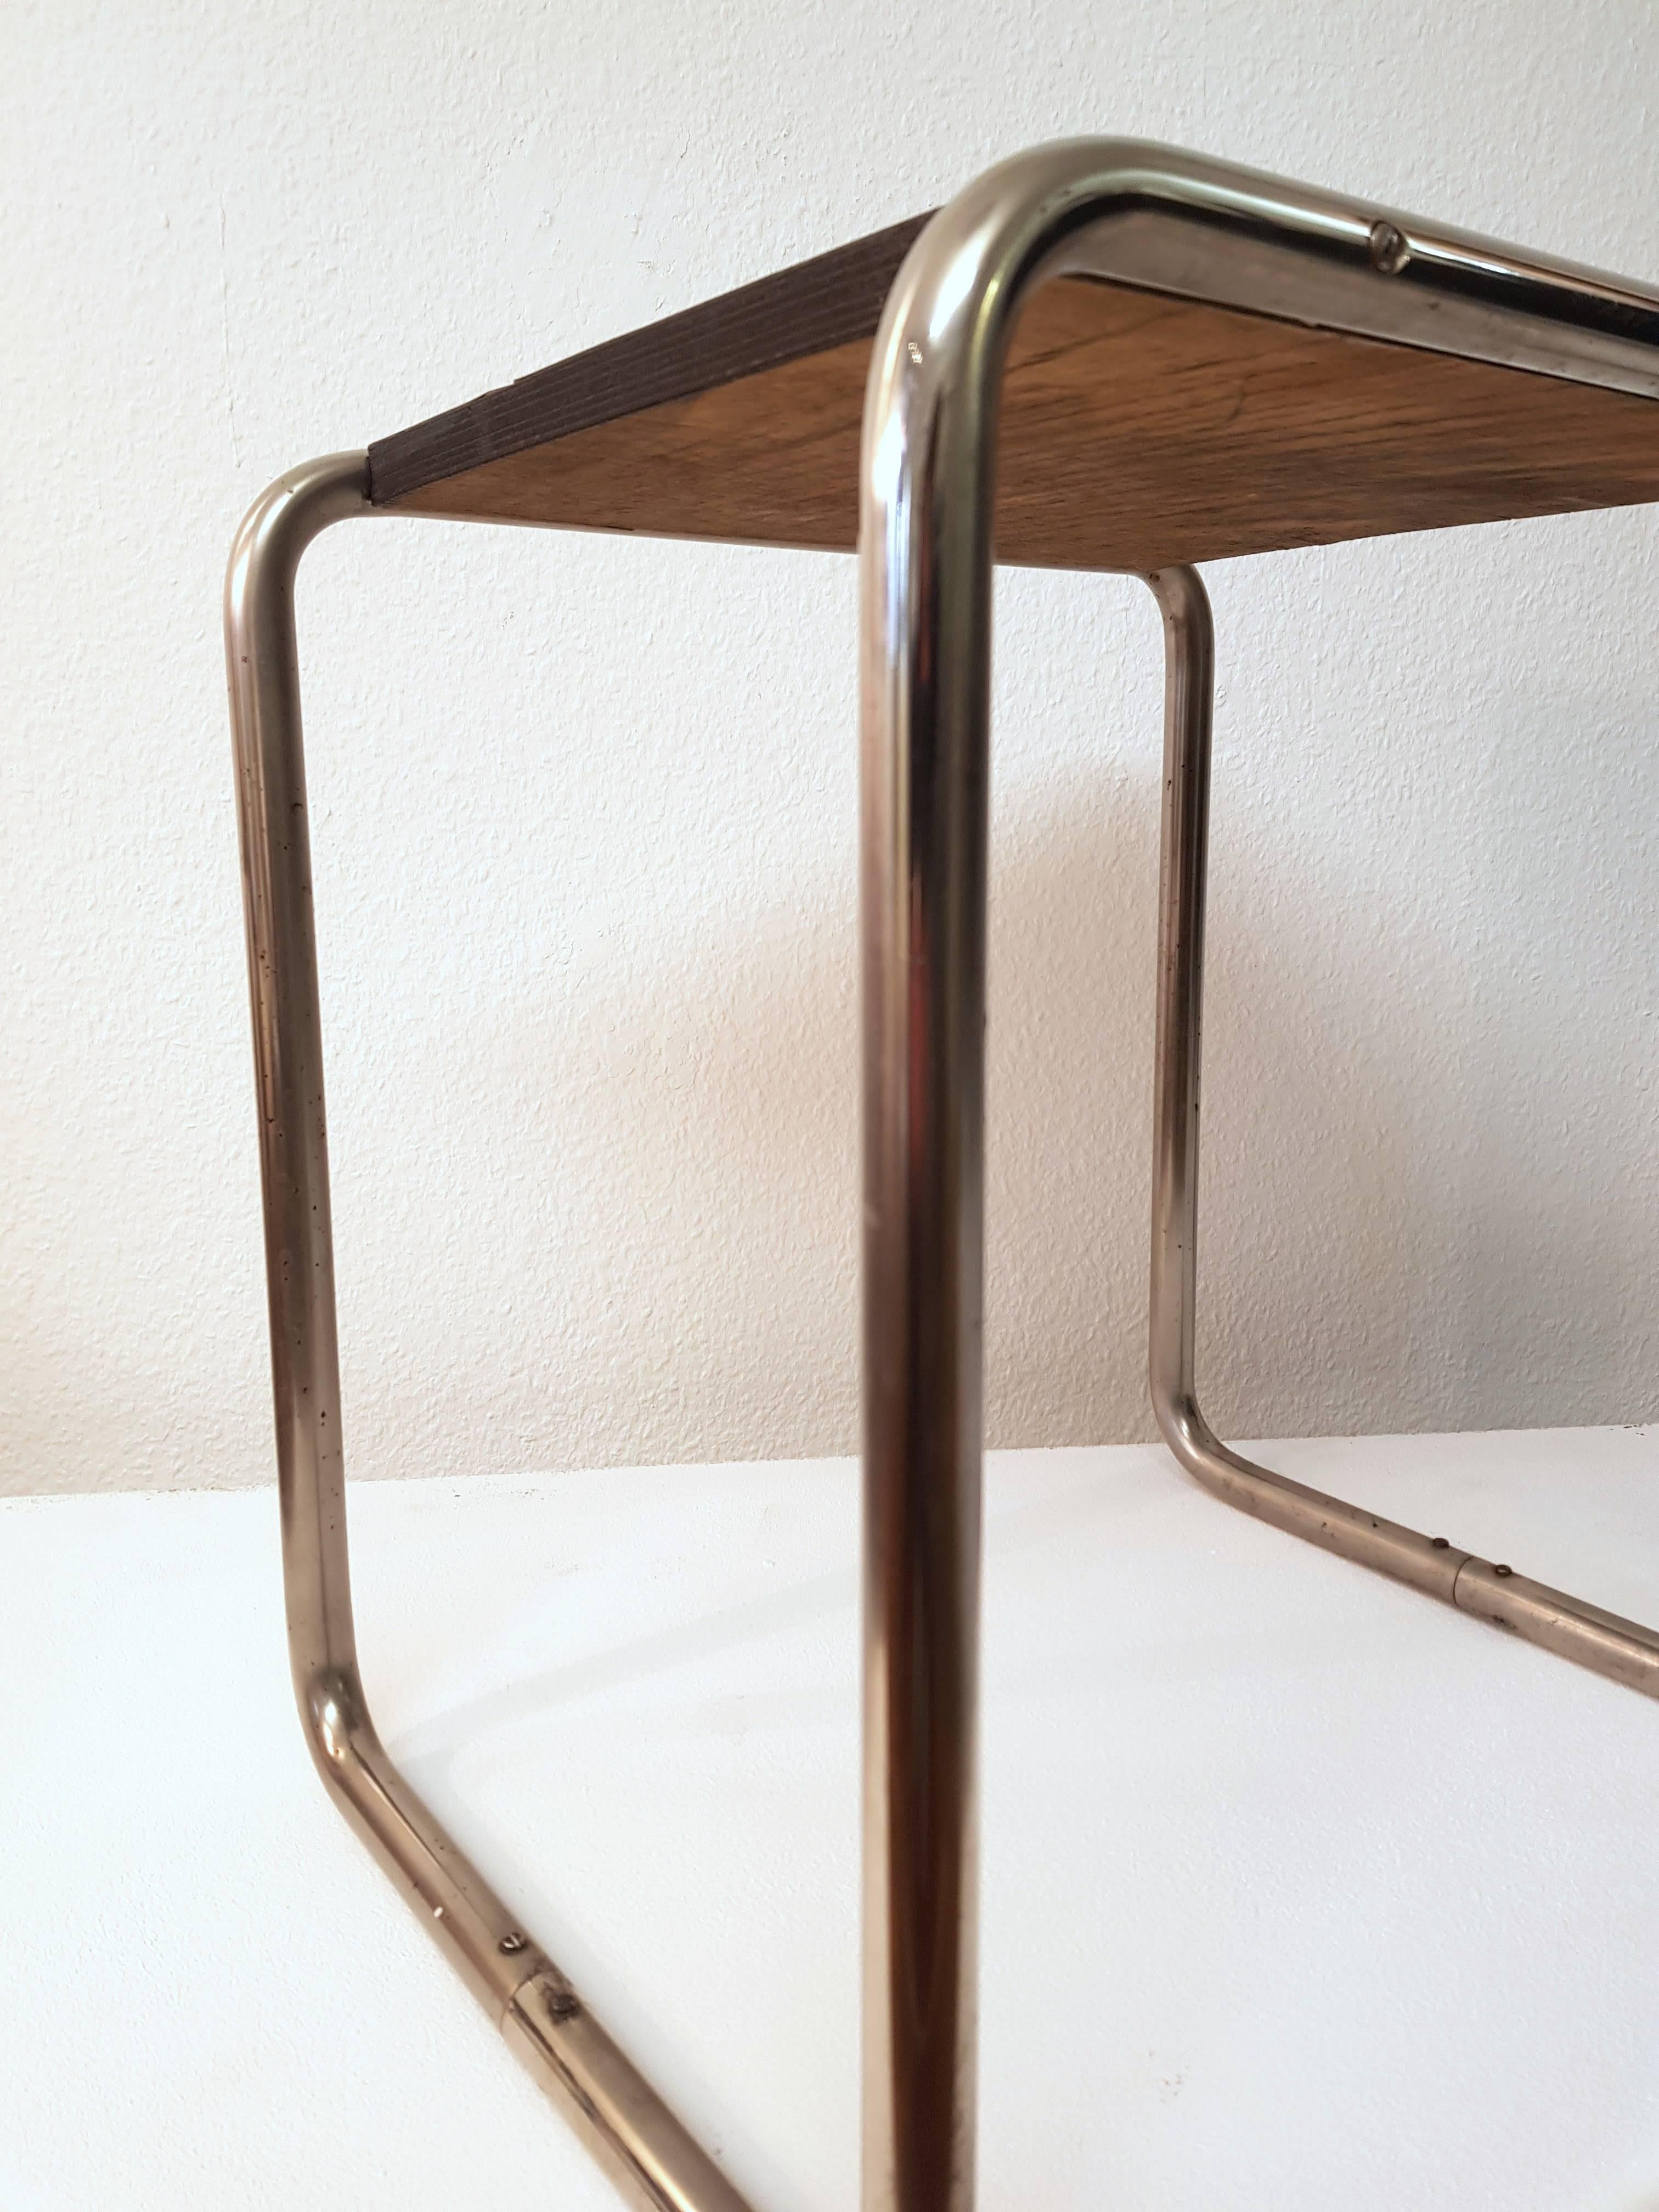 Very Early Marcel Breuer B9 Table, Standardmöbel GmbH Berlin, 1927, Bauhaus For Sale 1